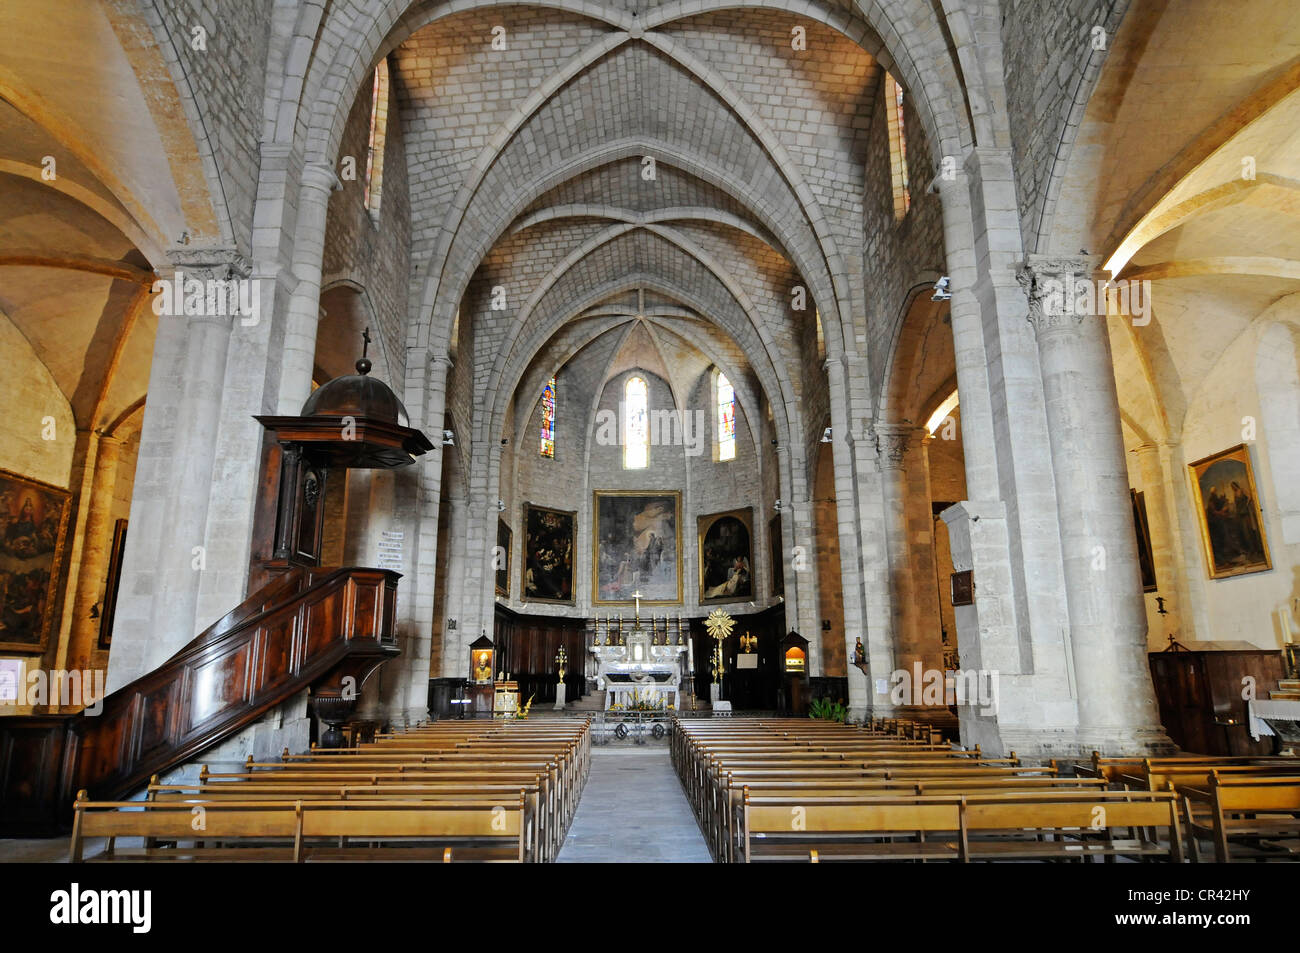 Ancienne Abbataile, abbey church, Saint Gilles du Gard, Languedoc-Roussillon region, France, Europe Stock Photo